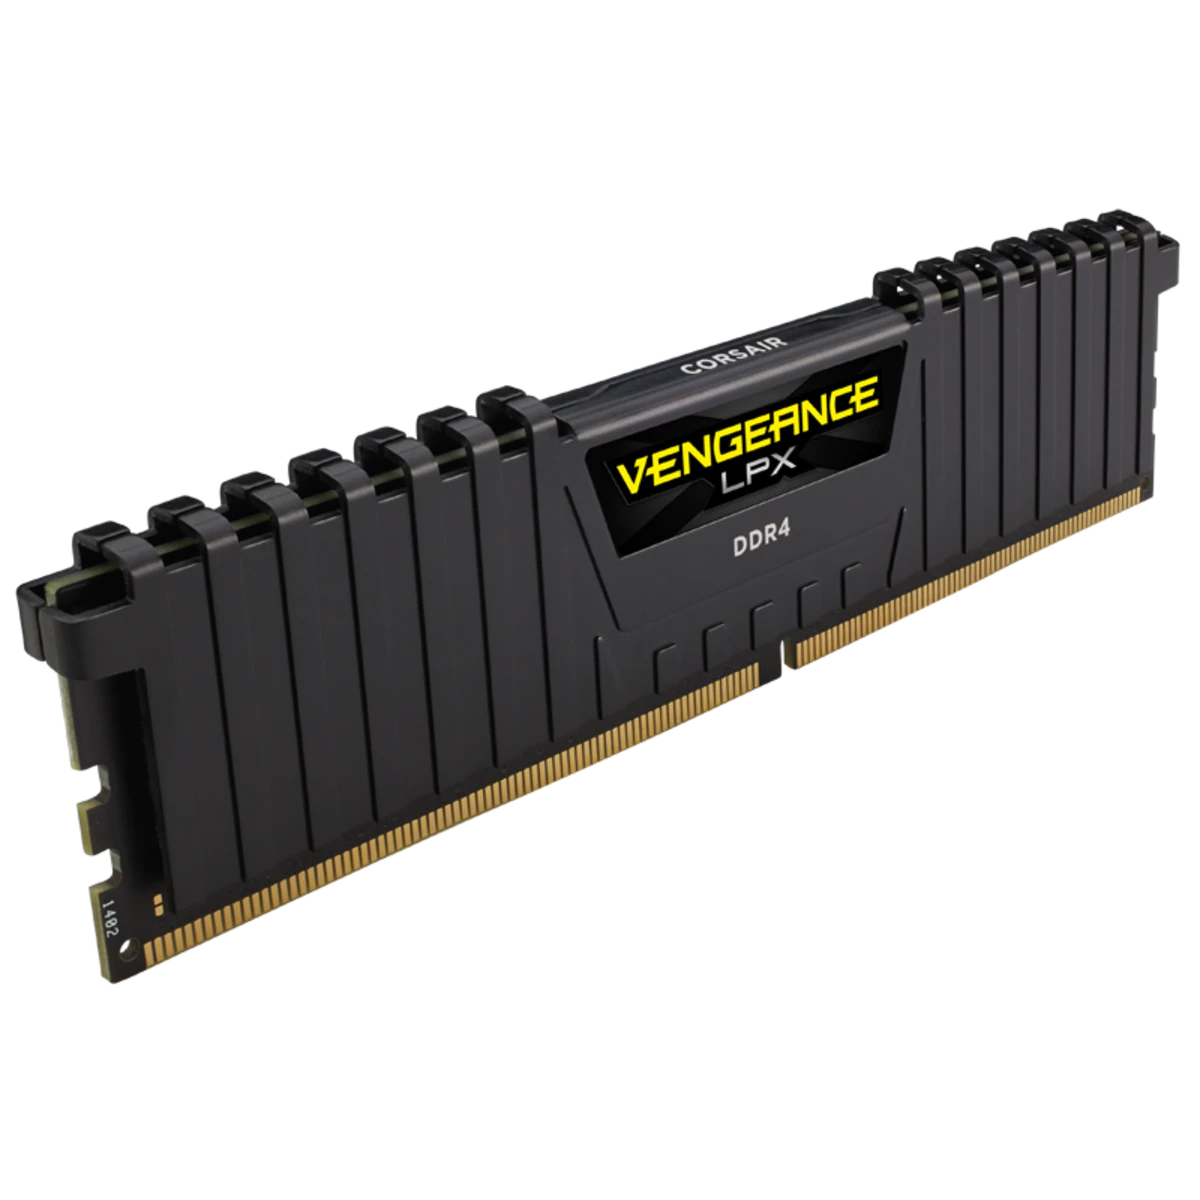 CORSAIR DDR4 8GB 2666MHz VengeLPX 8GB (1 x 8GB) - Black